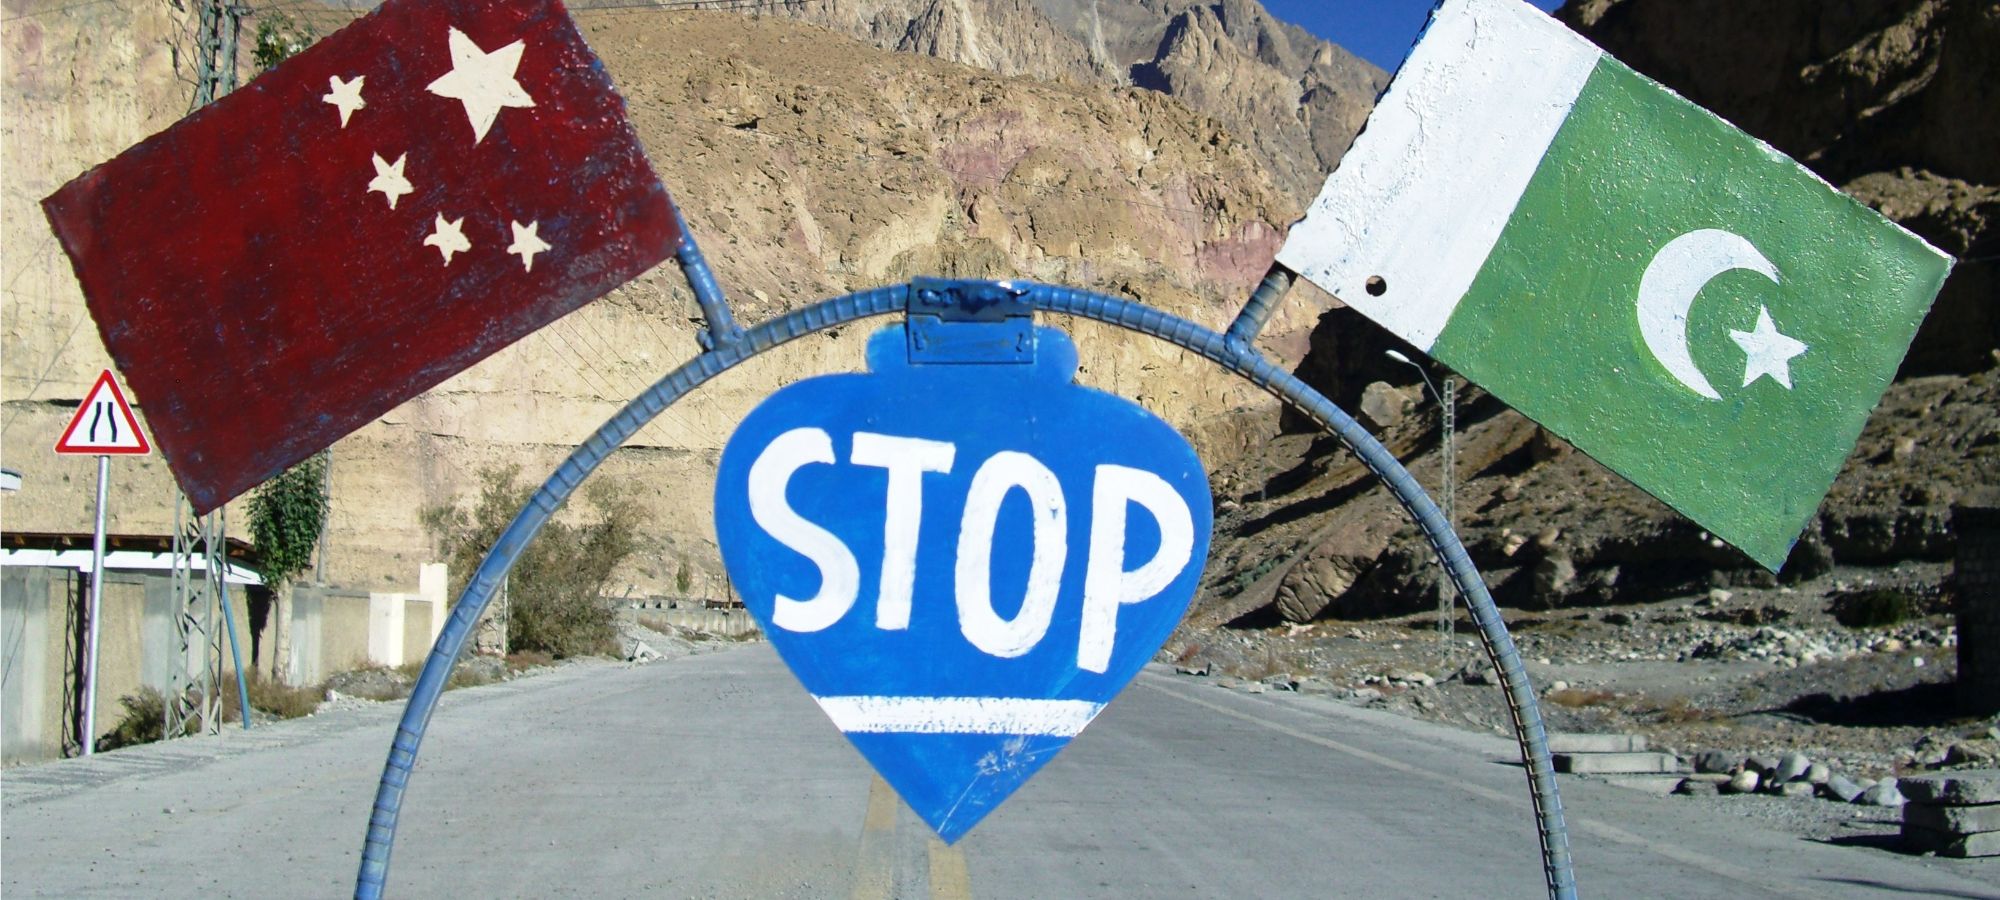 Border barrier at Sost, Pakistan 